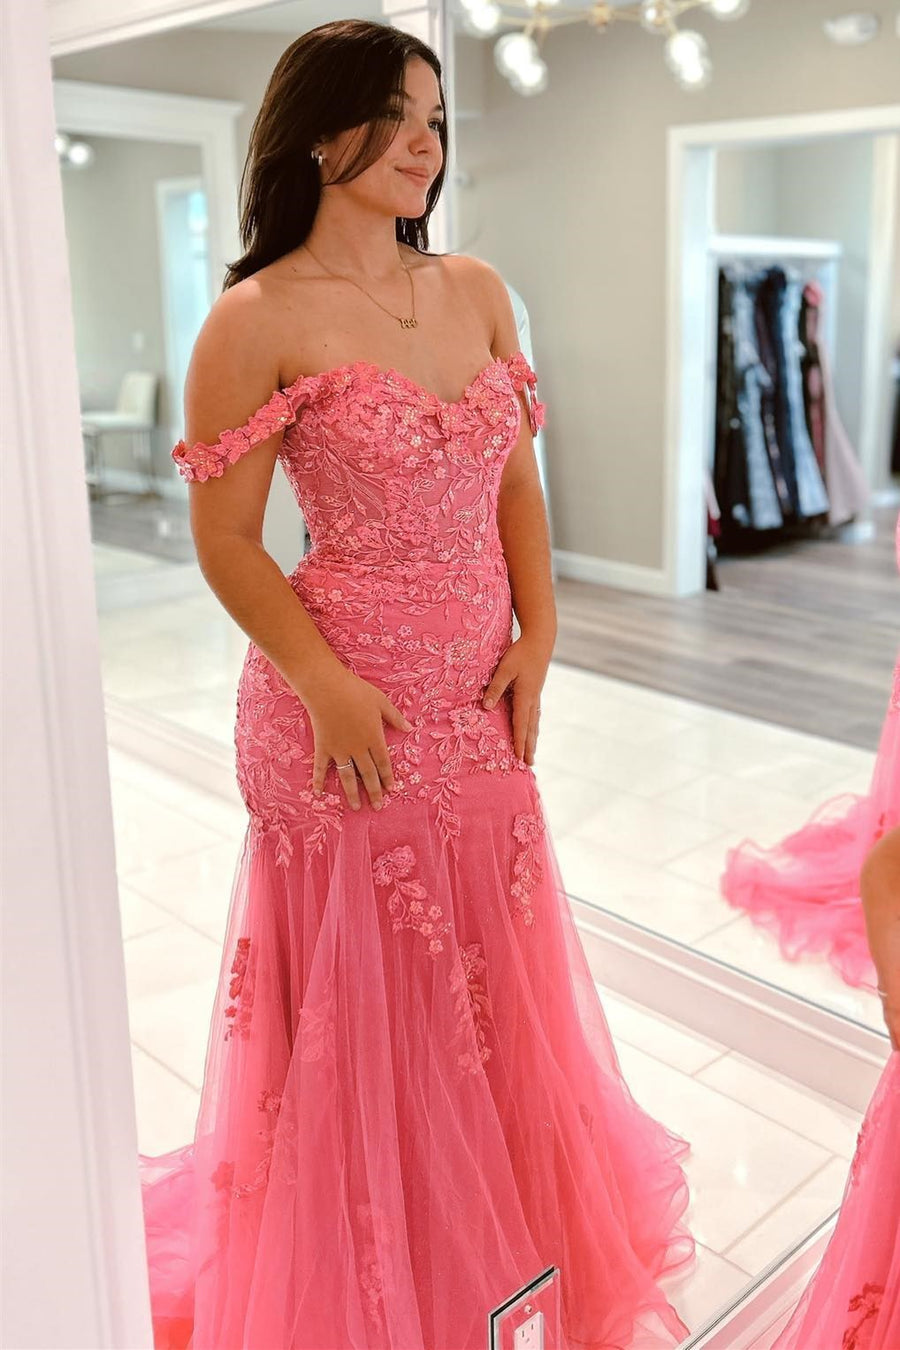 Pink Tulle Appliques Off-the-Shoulder Trumpet Long Prom Dress